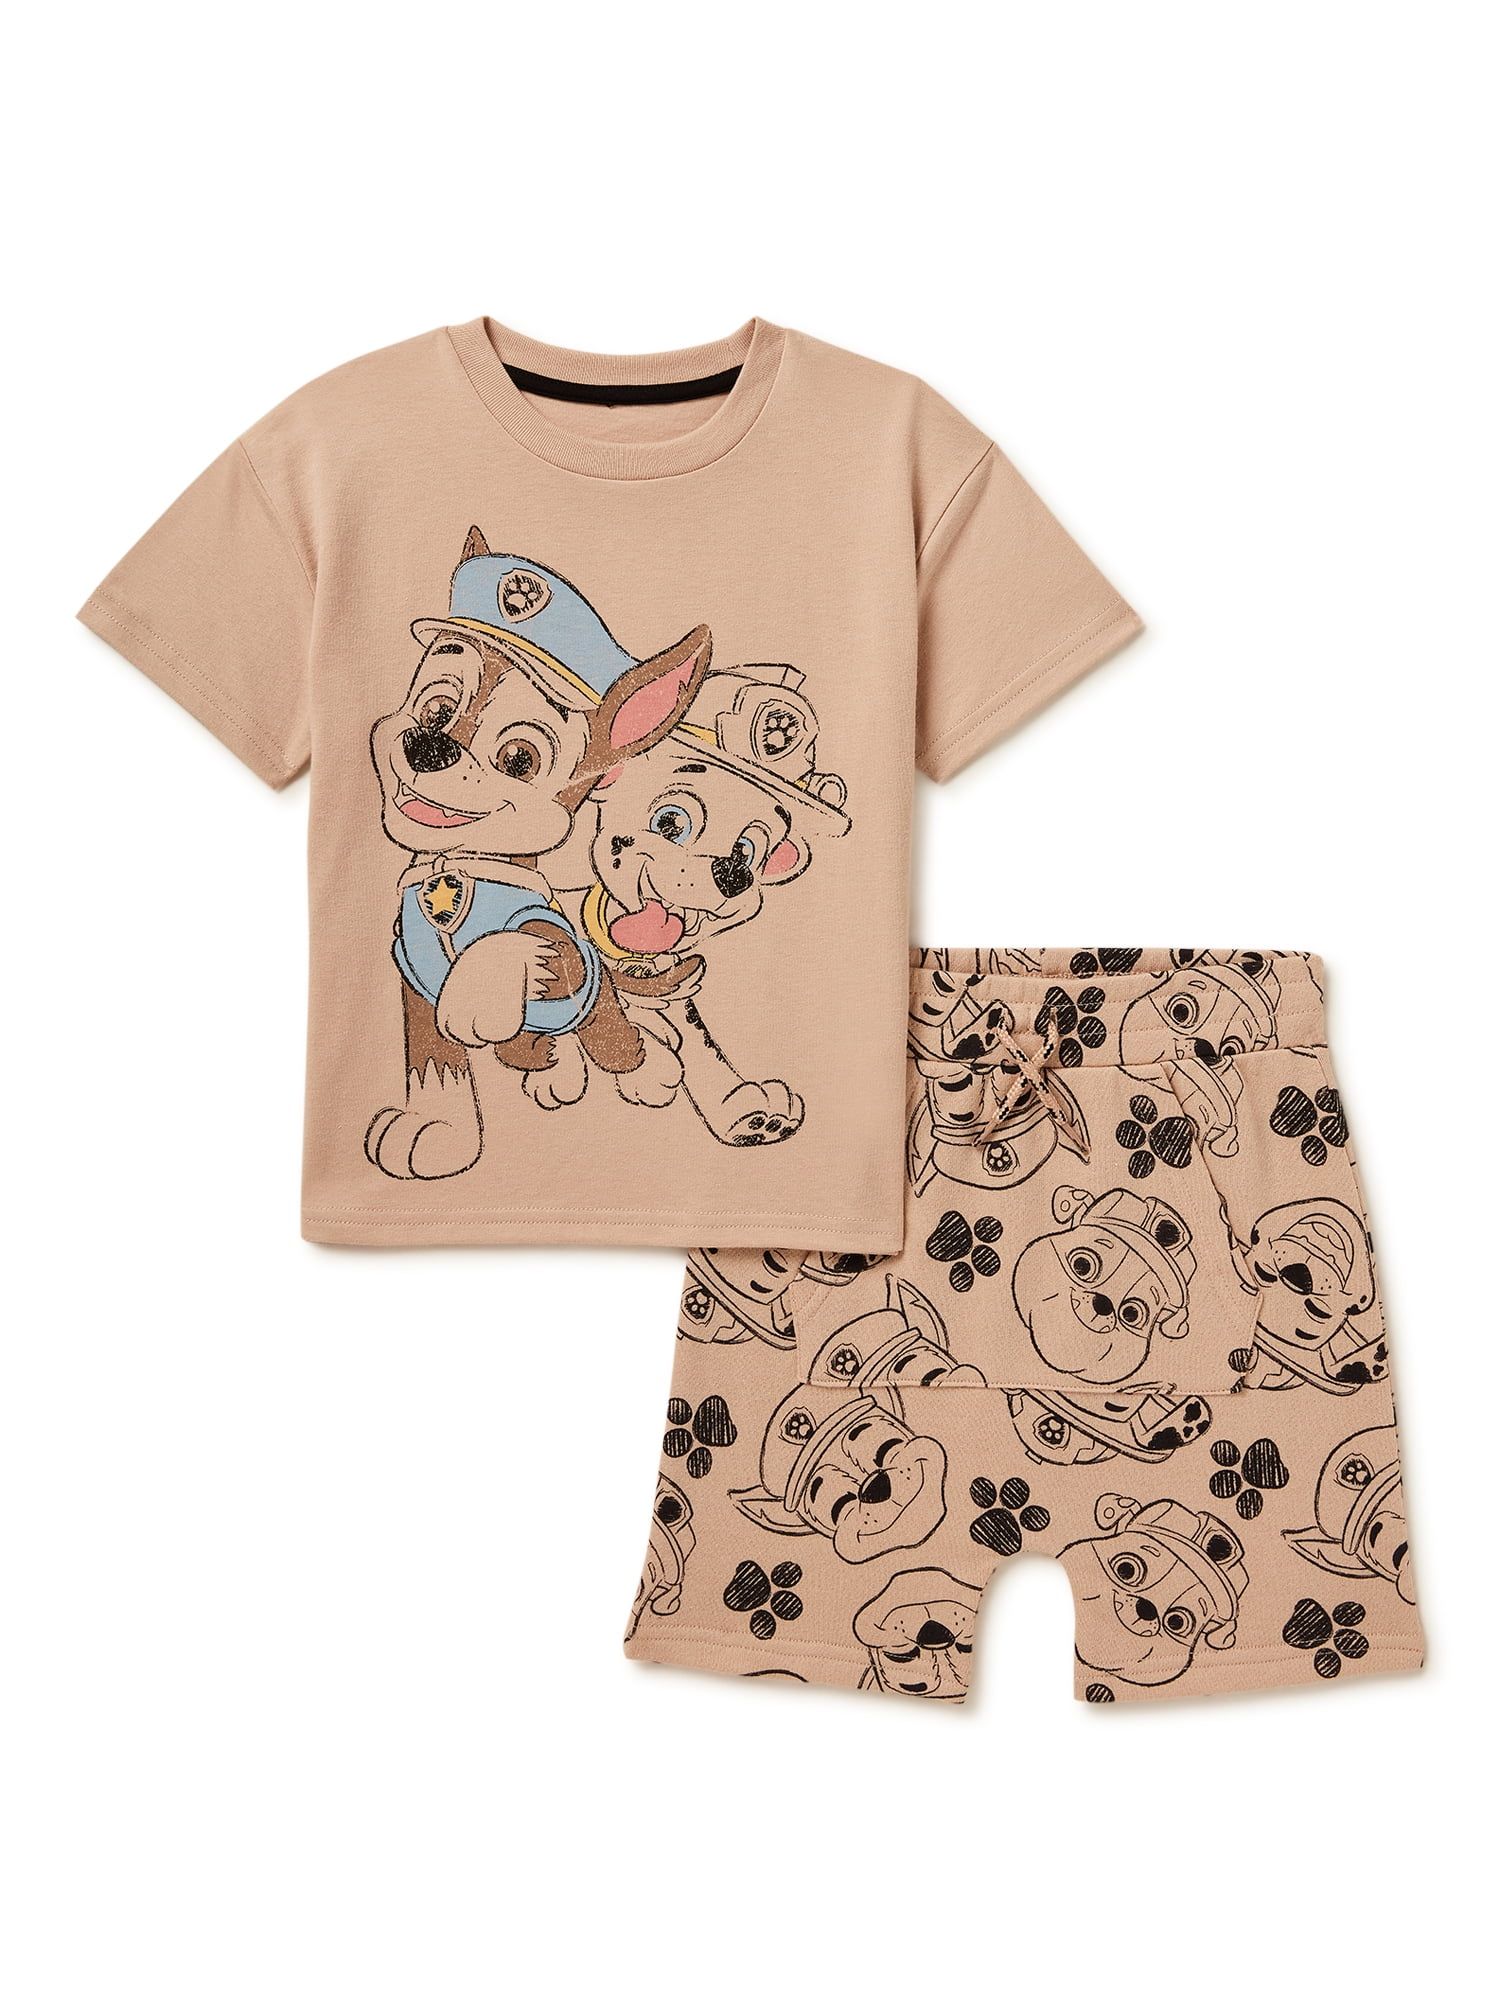 Paw Patrol Toddler Boys T-Shirt and Shorts, 2-Piece Set, Sizes 12 Months-5T | Walmart (US)